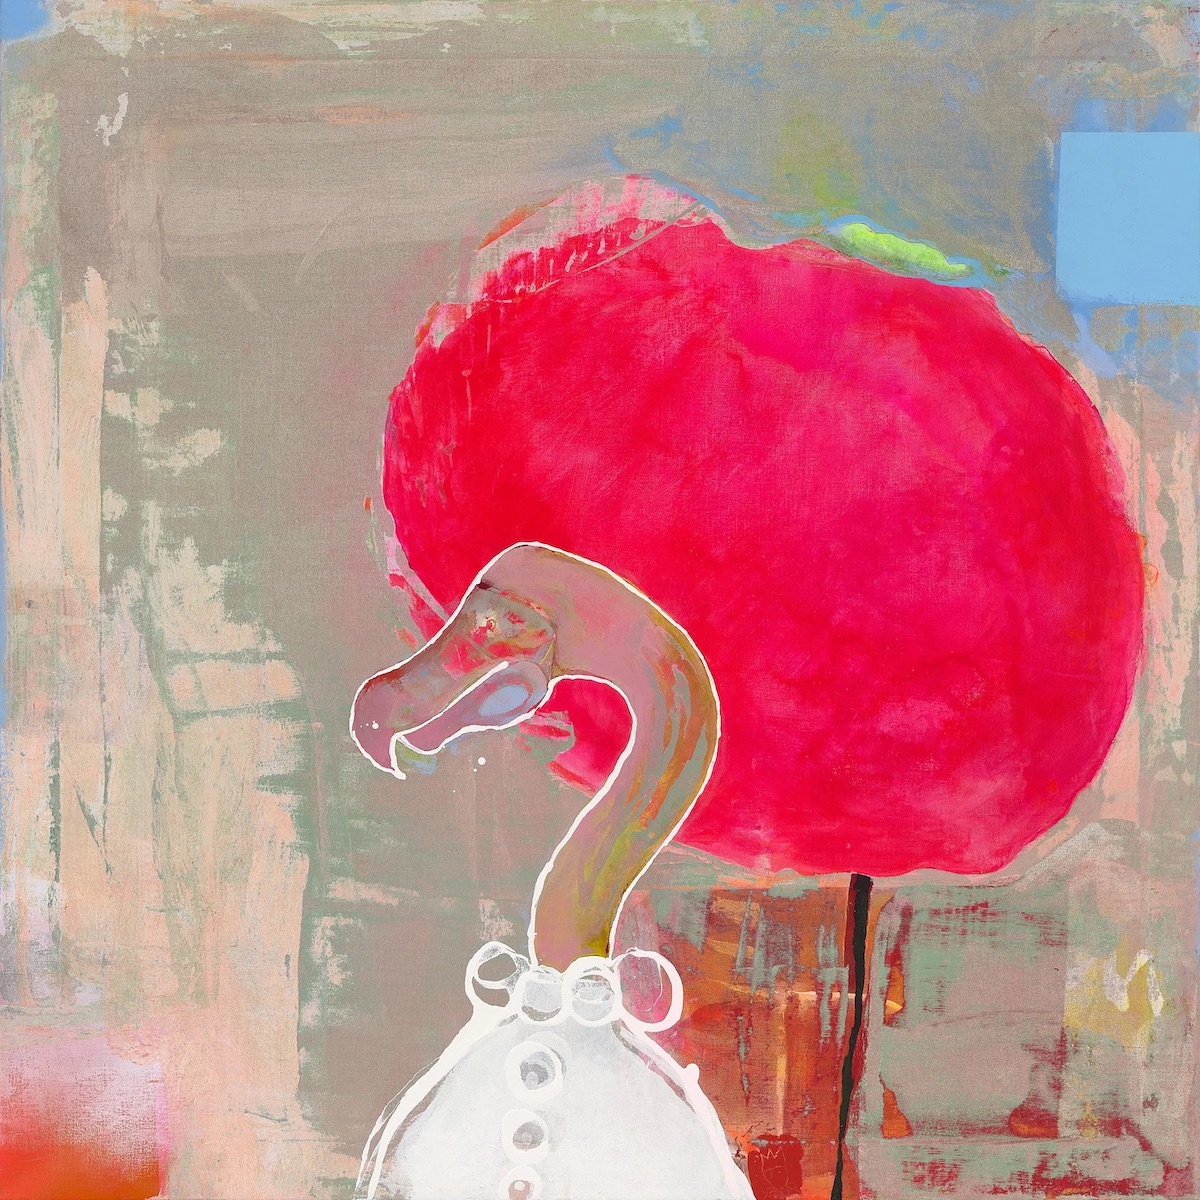 Cléa van der Grijn: Flamingo and Alice, mixed media on linen, 108 x 108cm | Cléa van der Grijn: The disembodied adventures of Cléa  | Thursday 9 February – Saturday 4 March 2023 | Solomon Fine Art